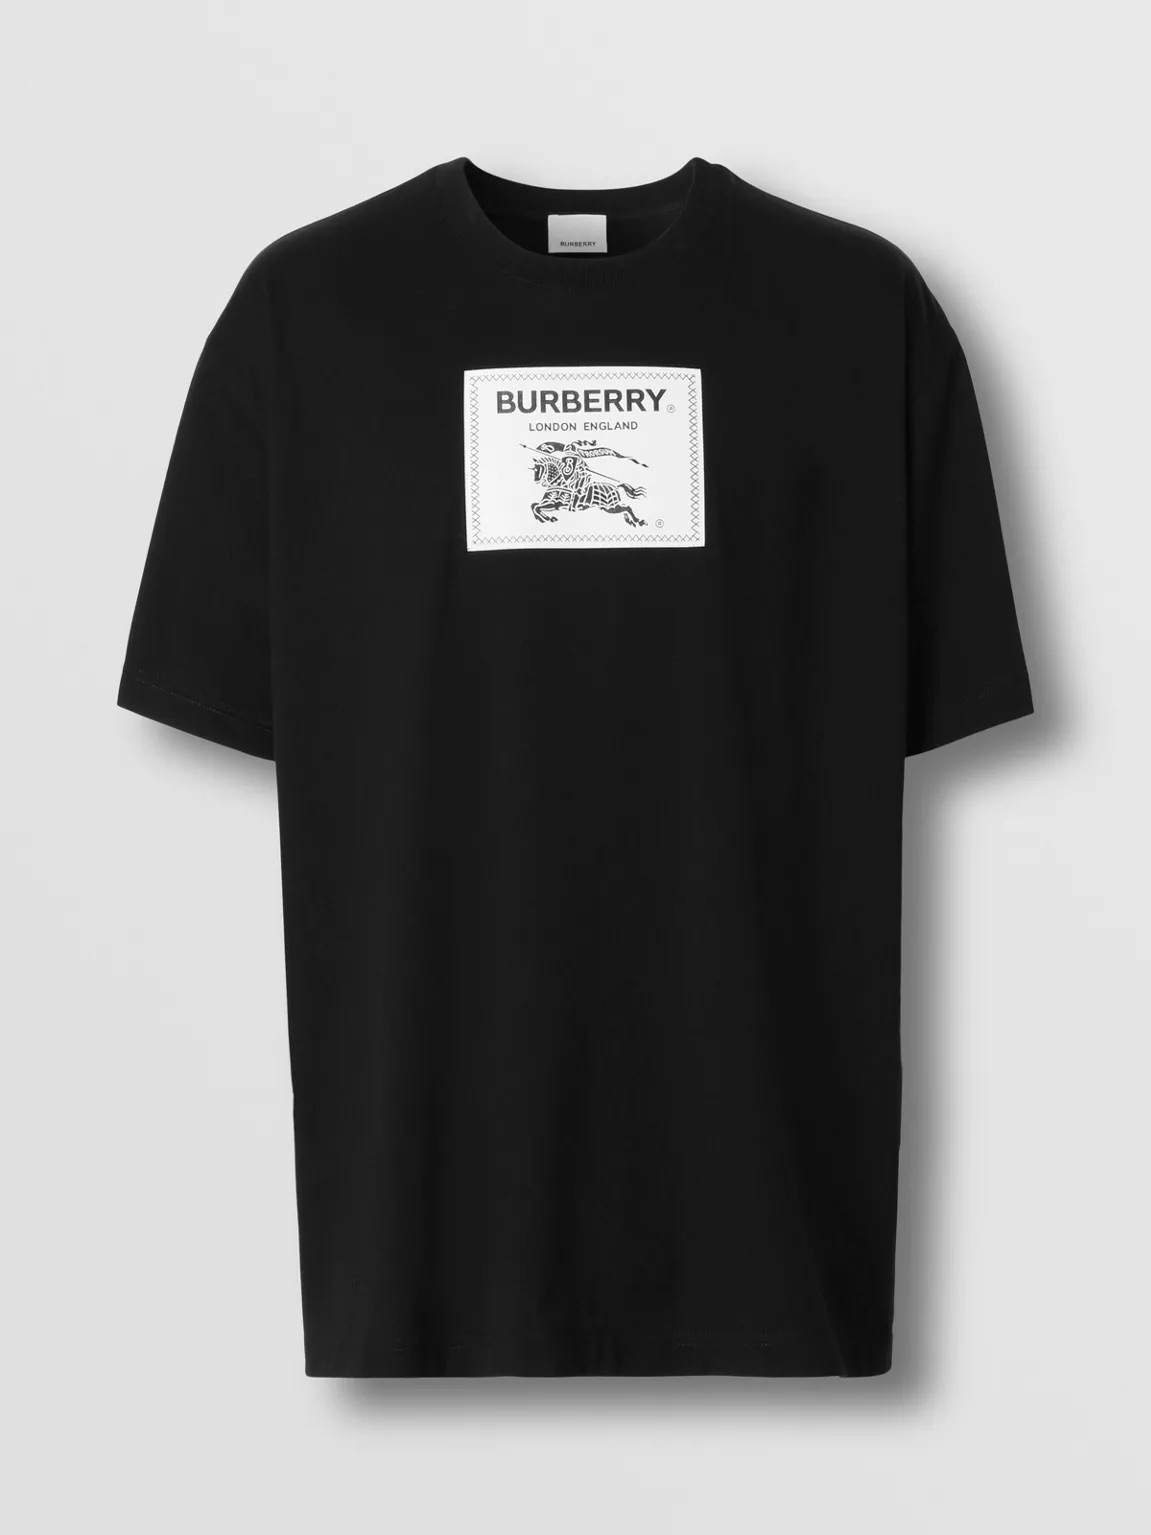 Winst Ademen diamant Burberry☆ Cotton T-shirt with Prorsum Label Black/White www.omniblonde.com